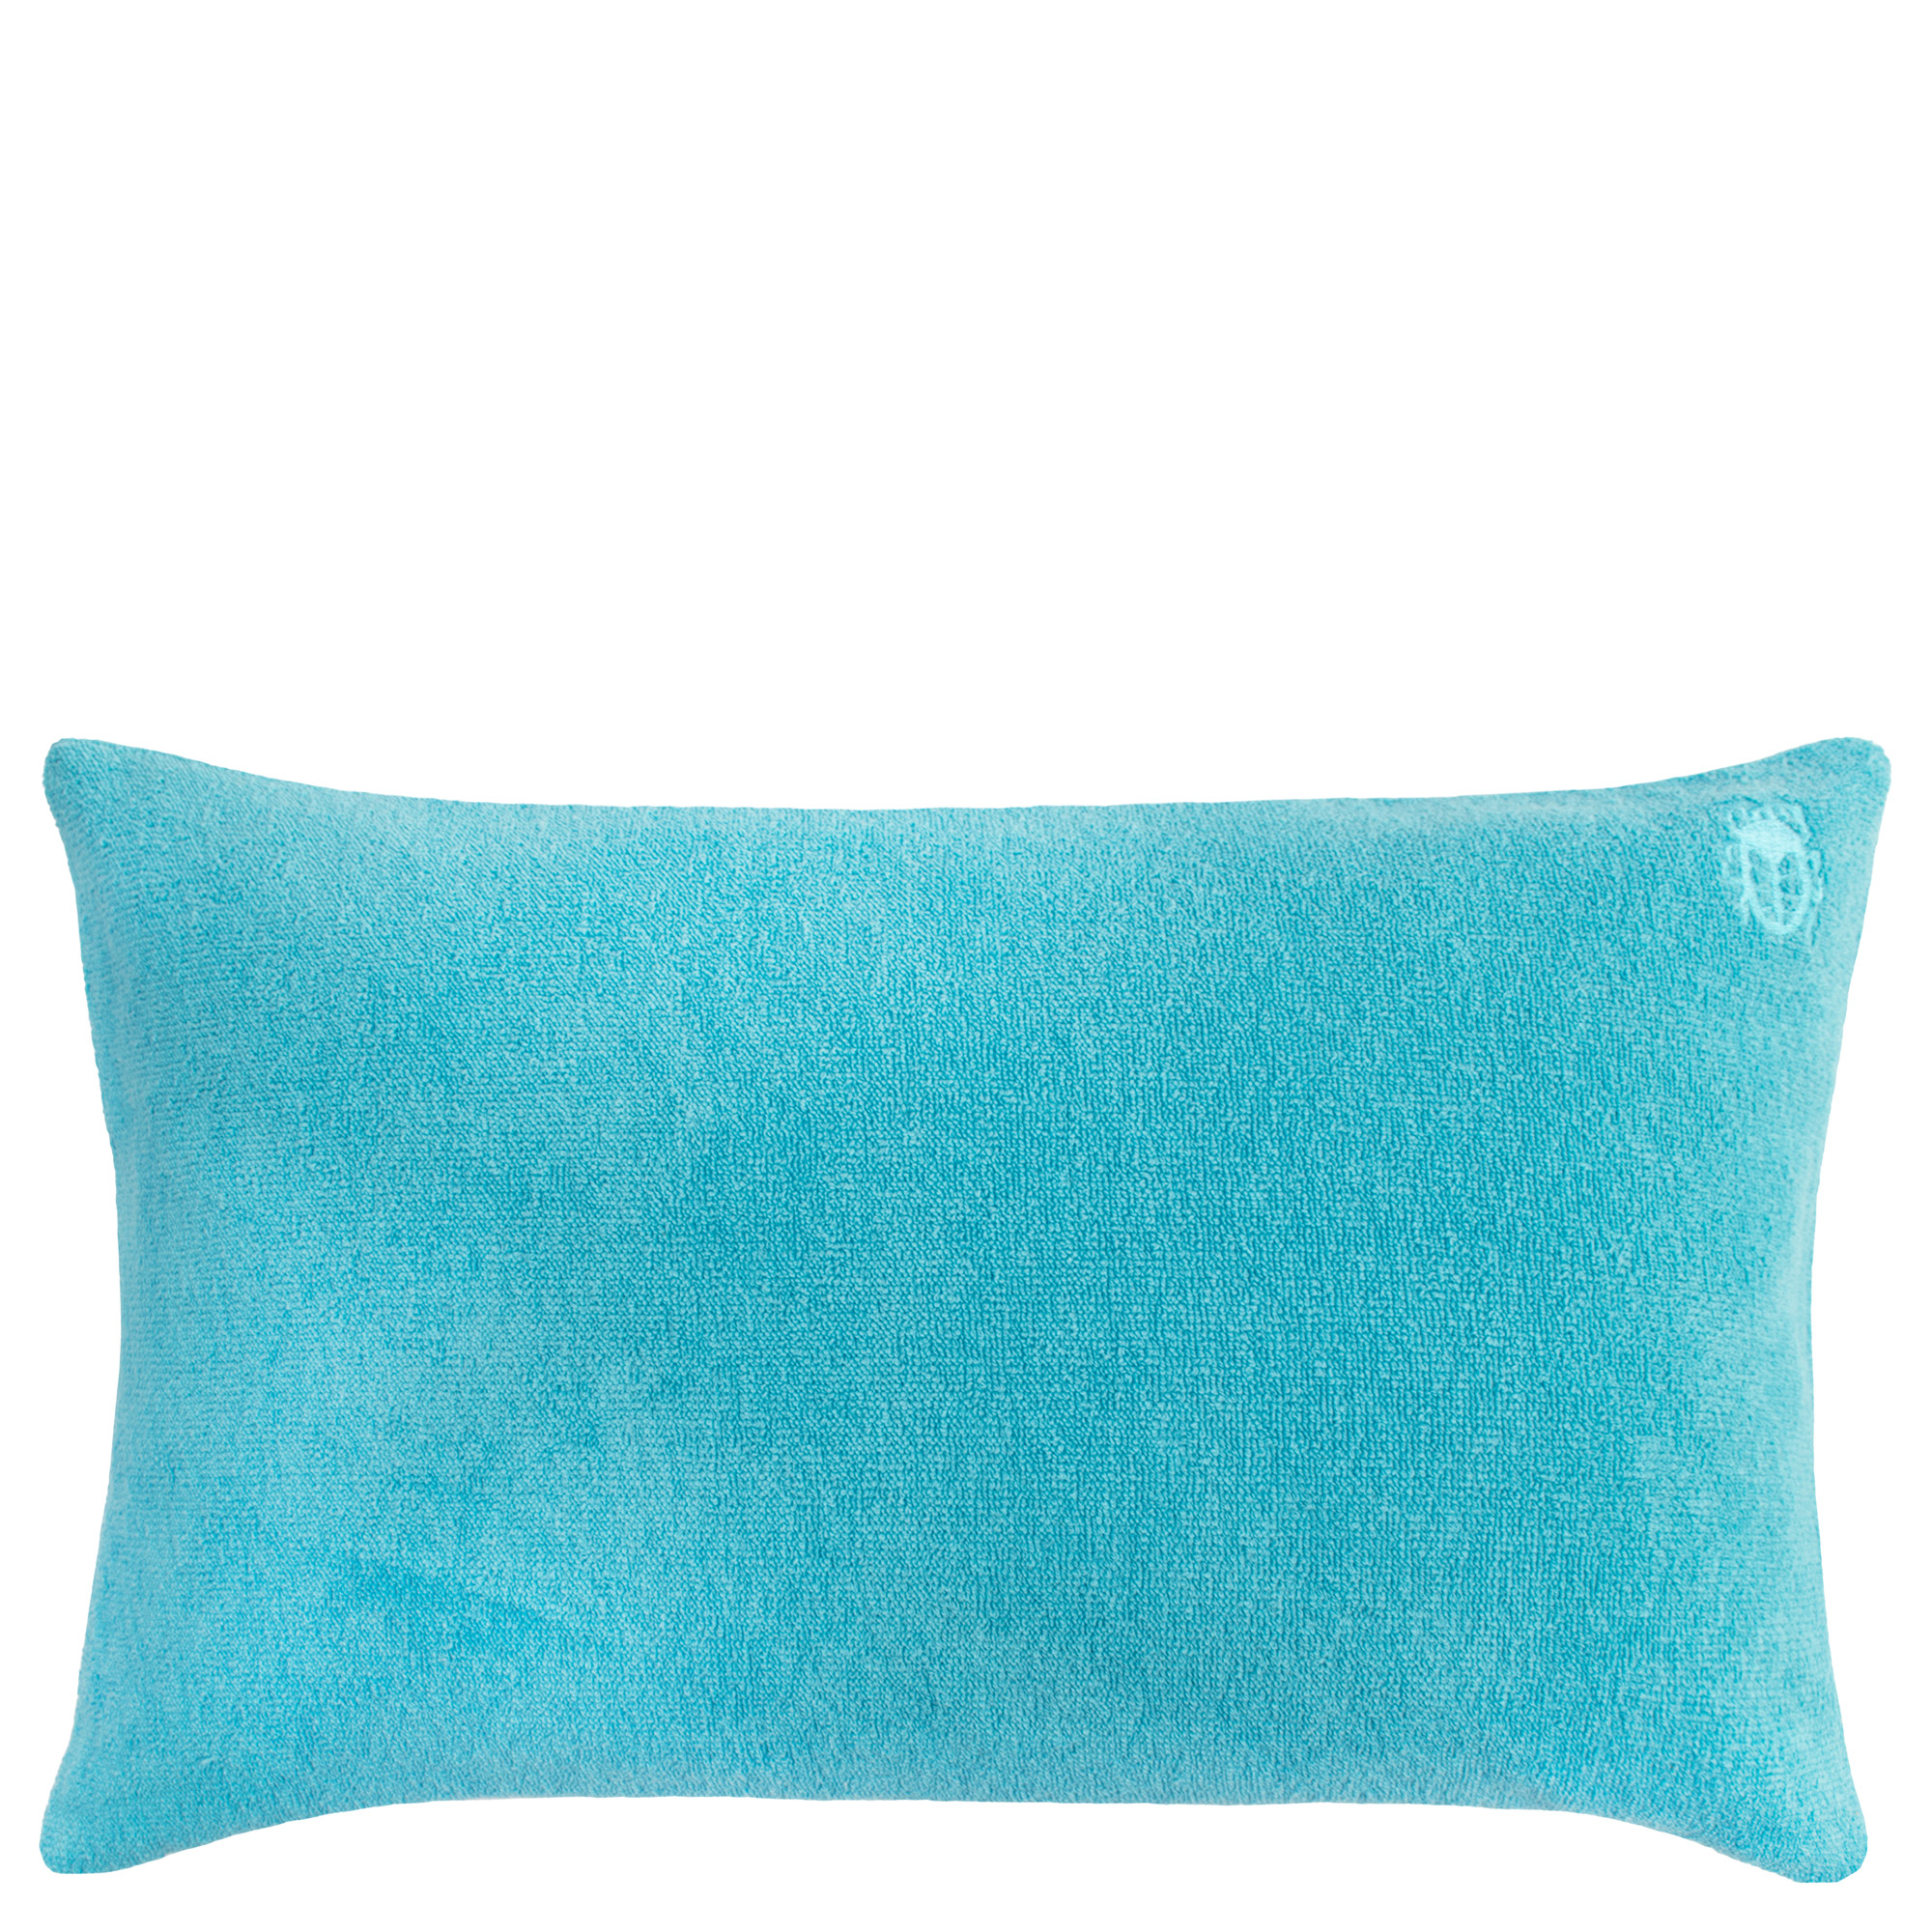 Kissenbezug 30x50 hellblau aus Baumwolle, zoeppritz Spot 